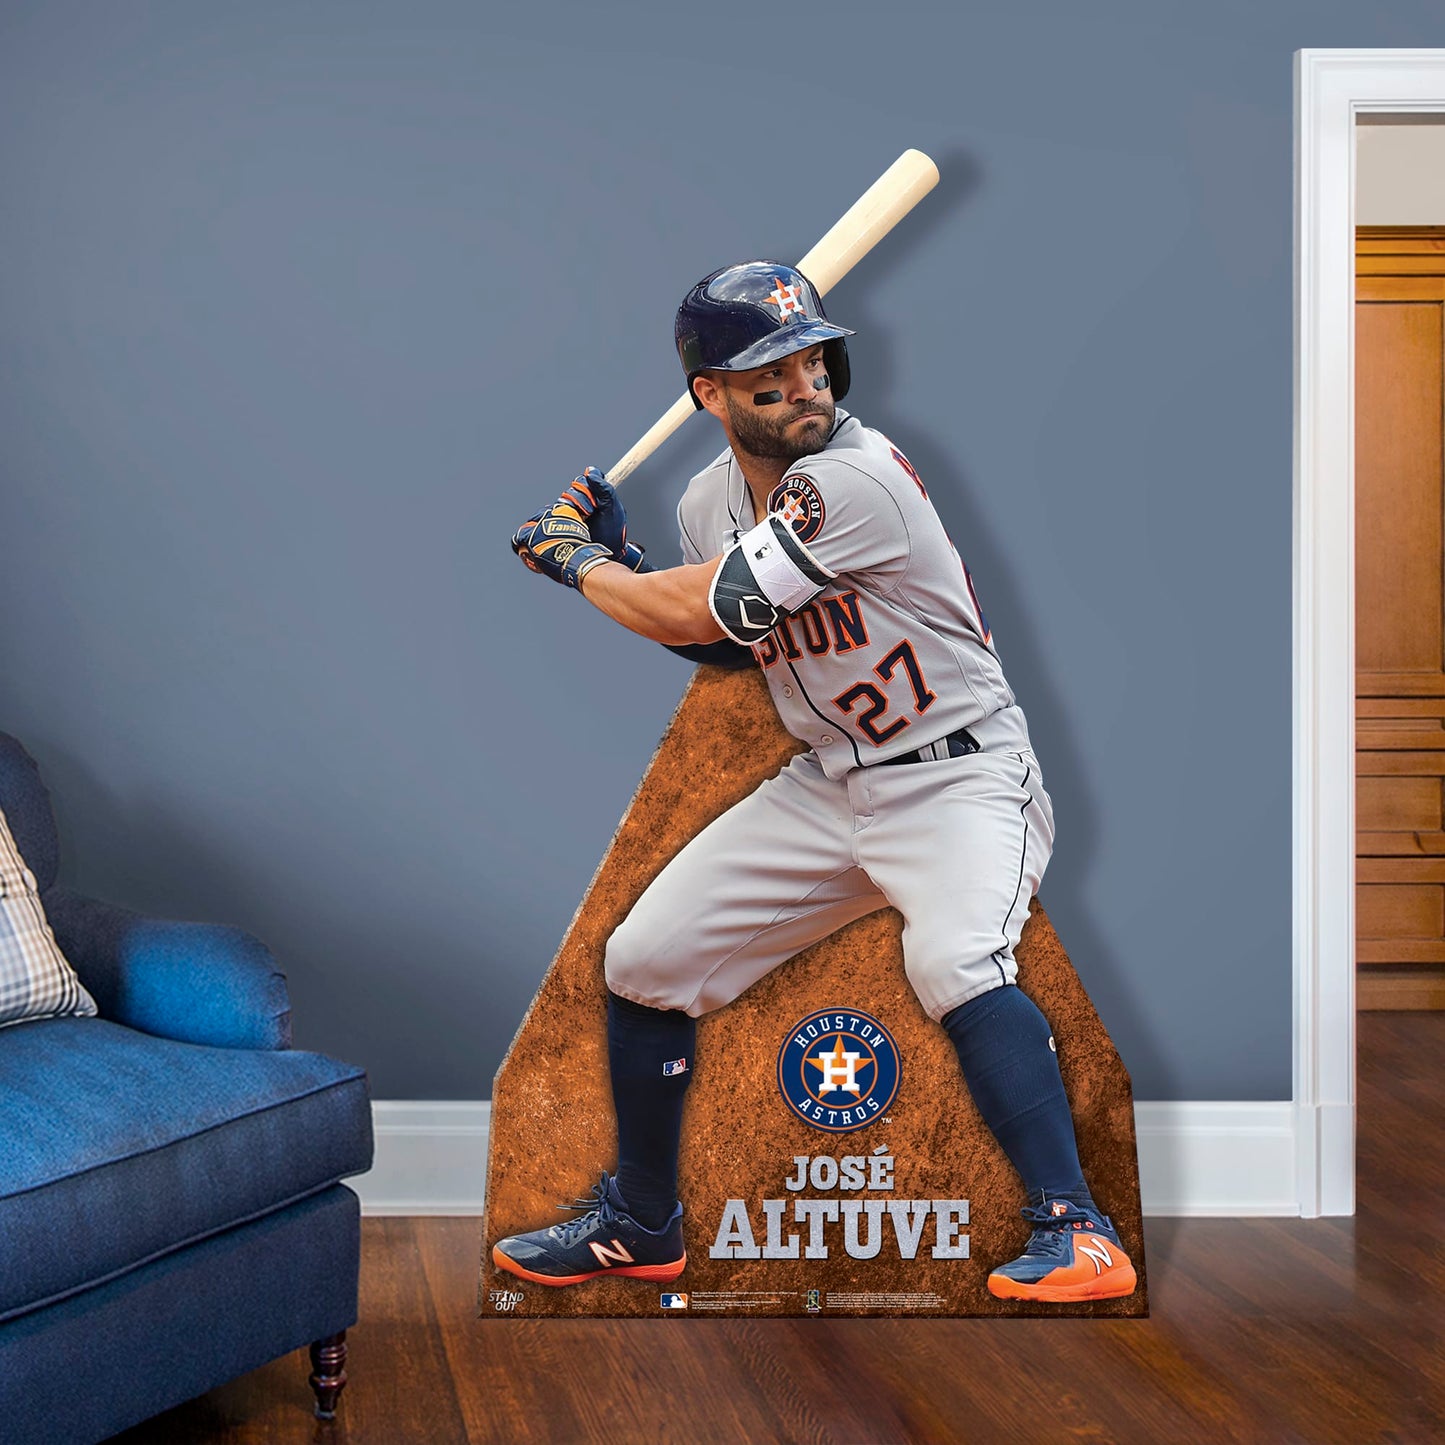 Jose Altuve Batting MLB Removable Wall Decal